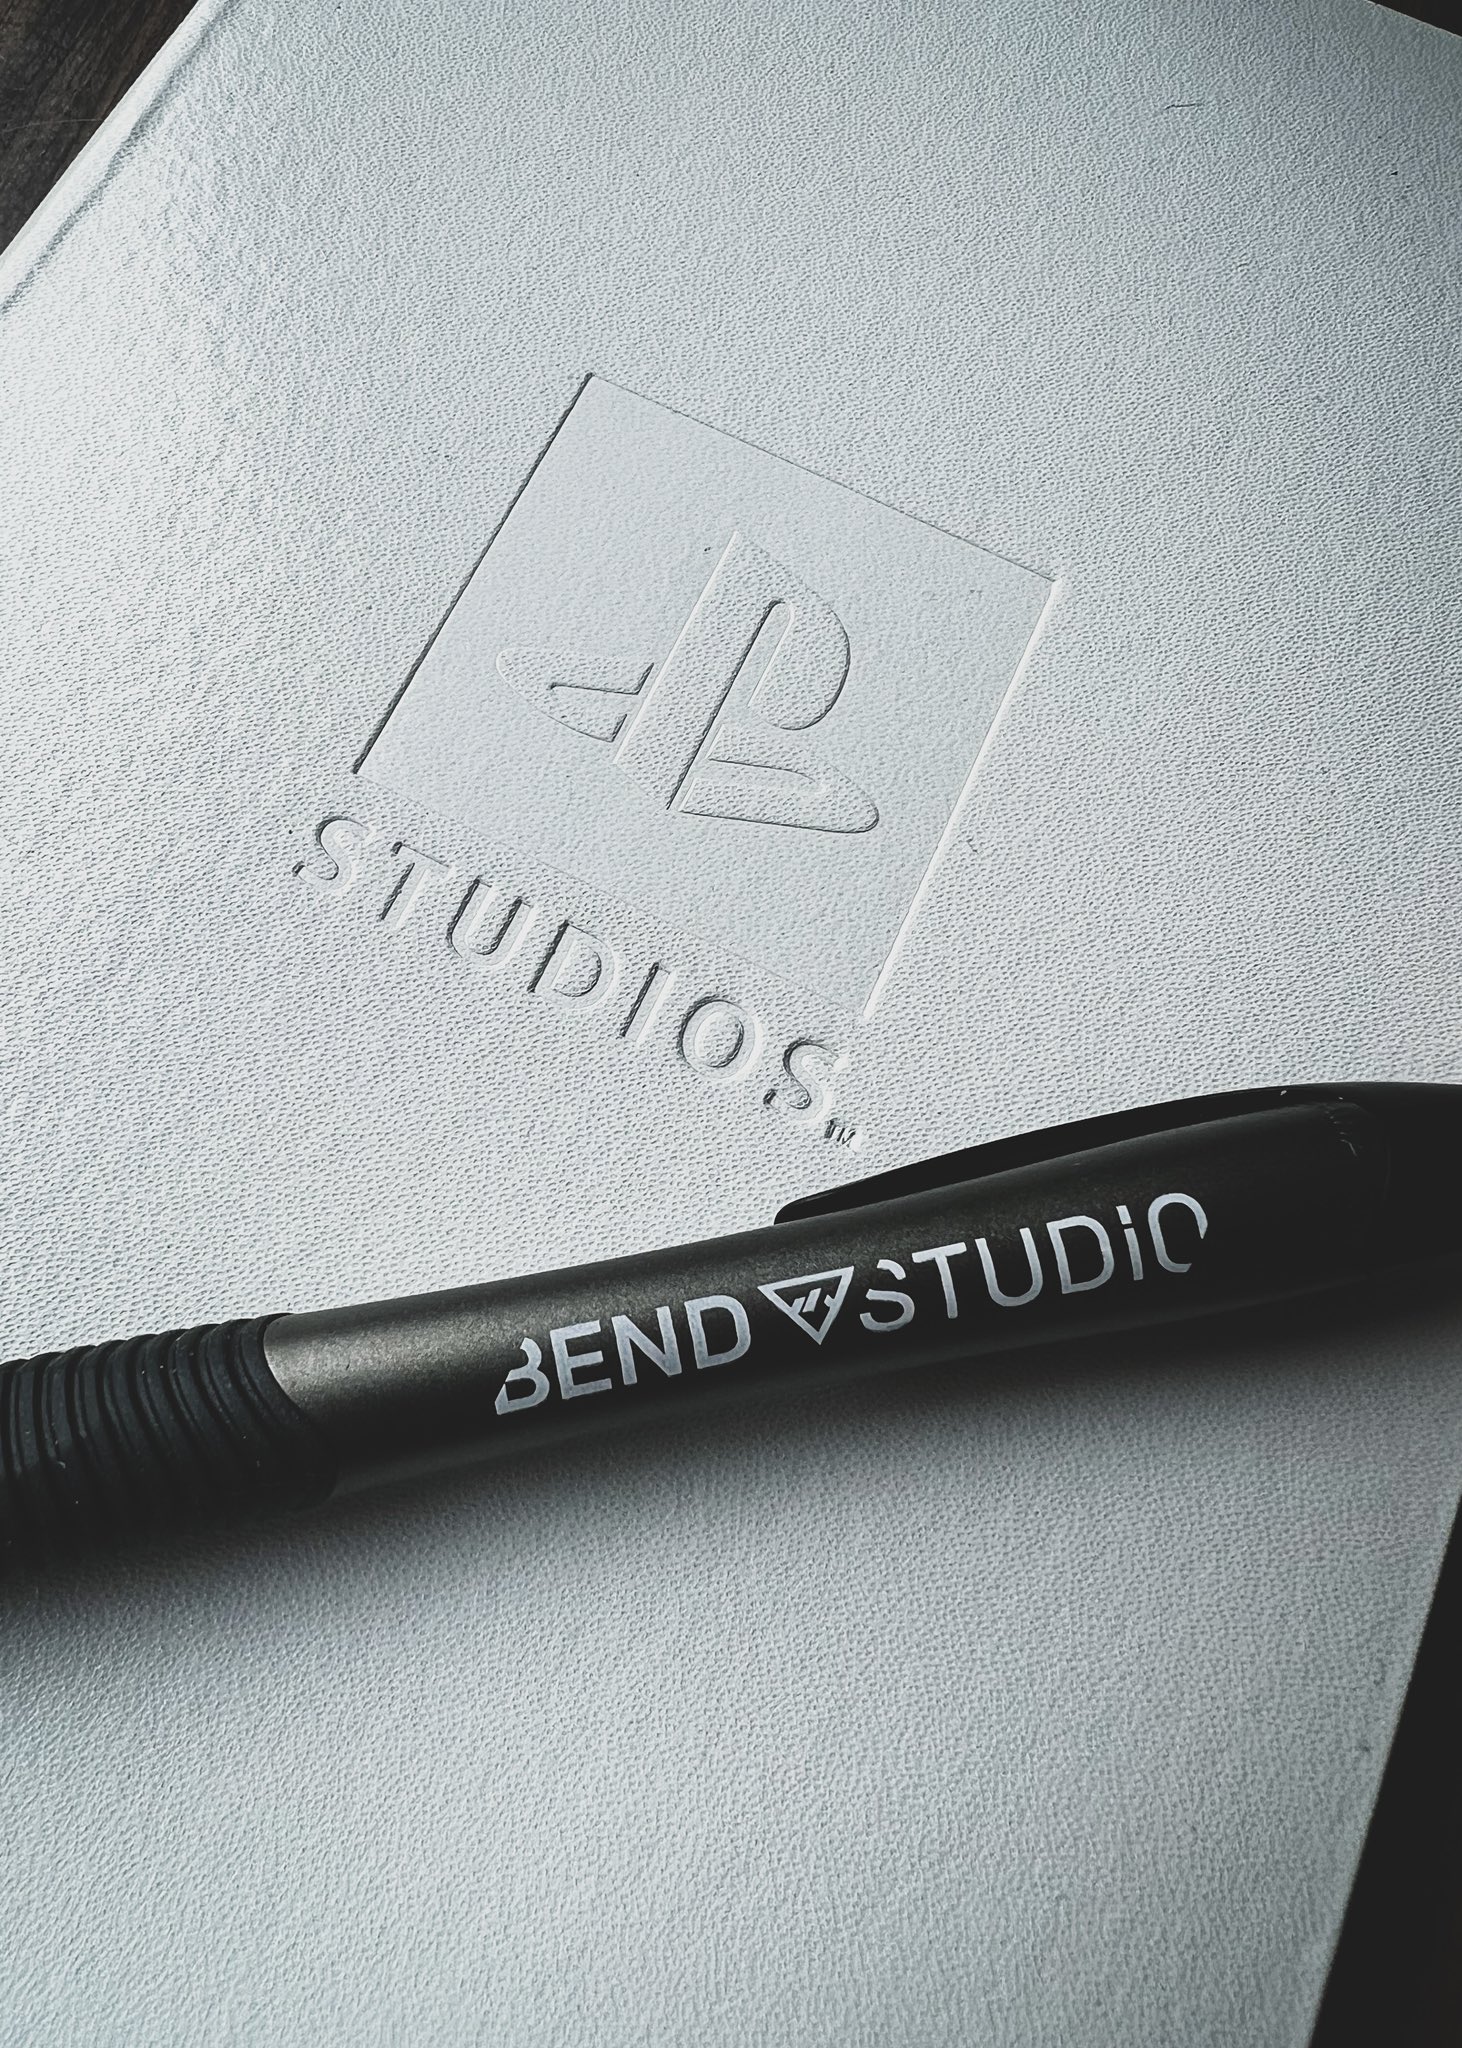 Bend Studio #DaysGone on Twitter  Anatomia do rosto, Jogos ps4, Imagem de  jogos